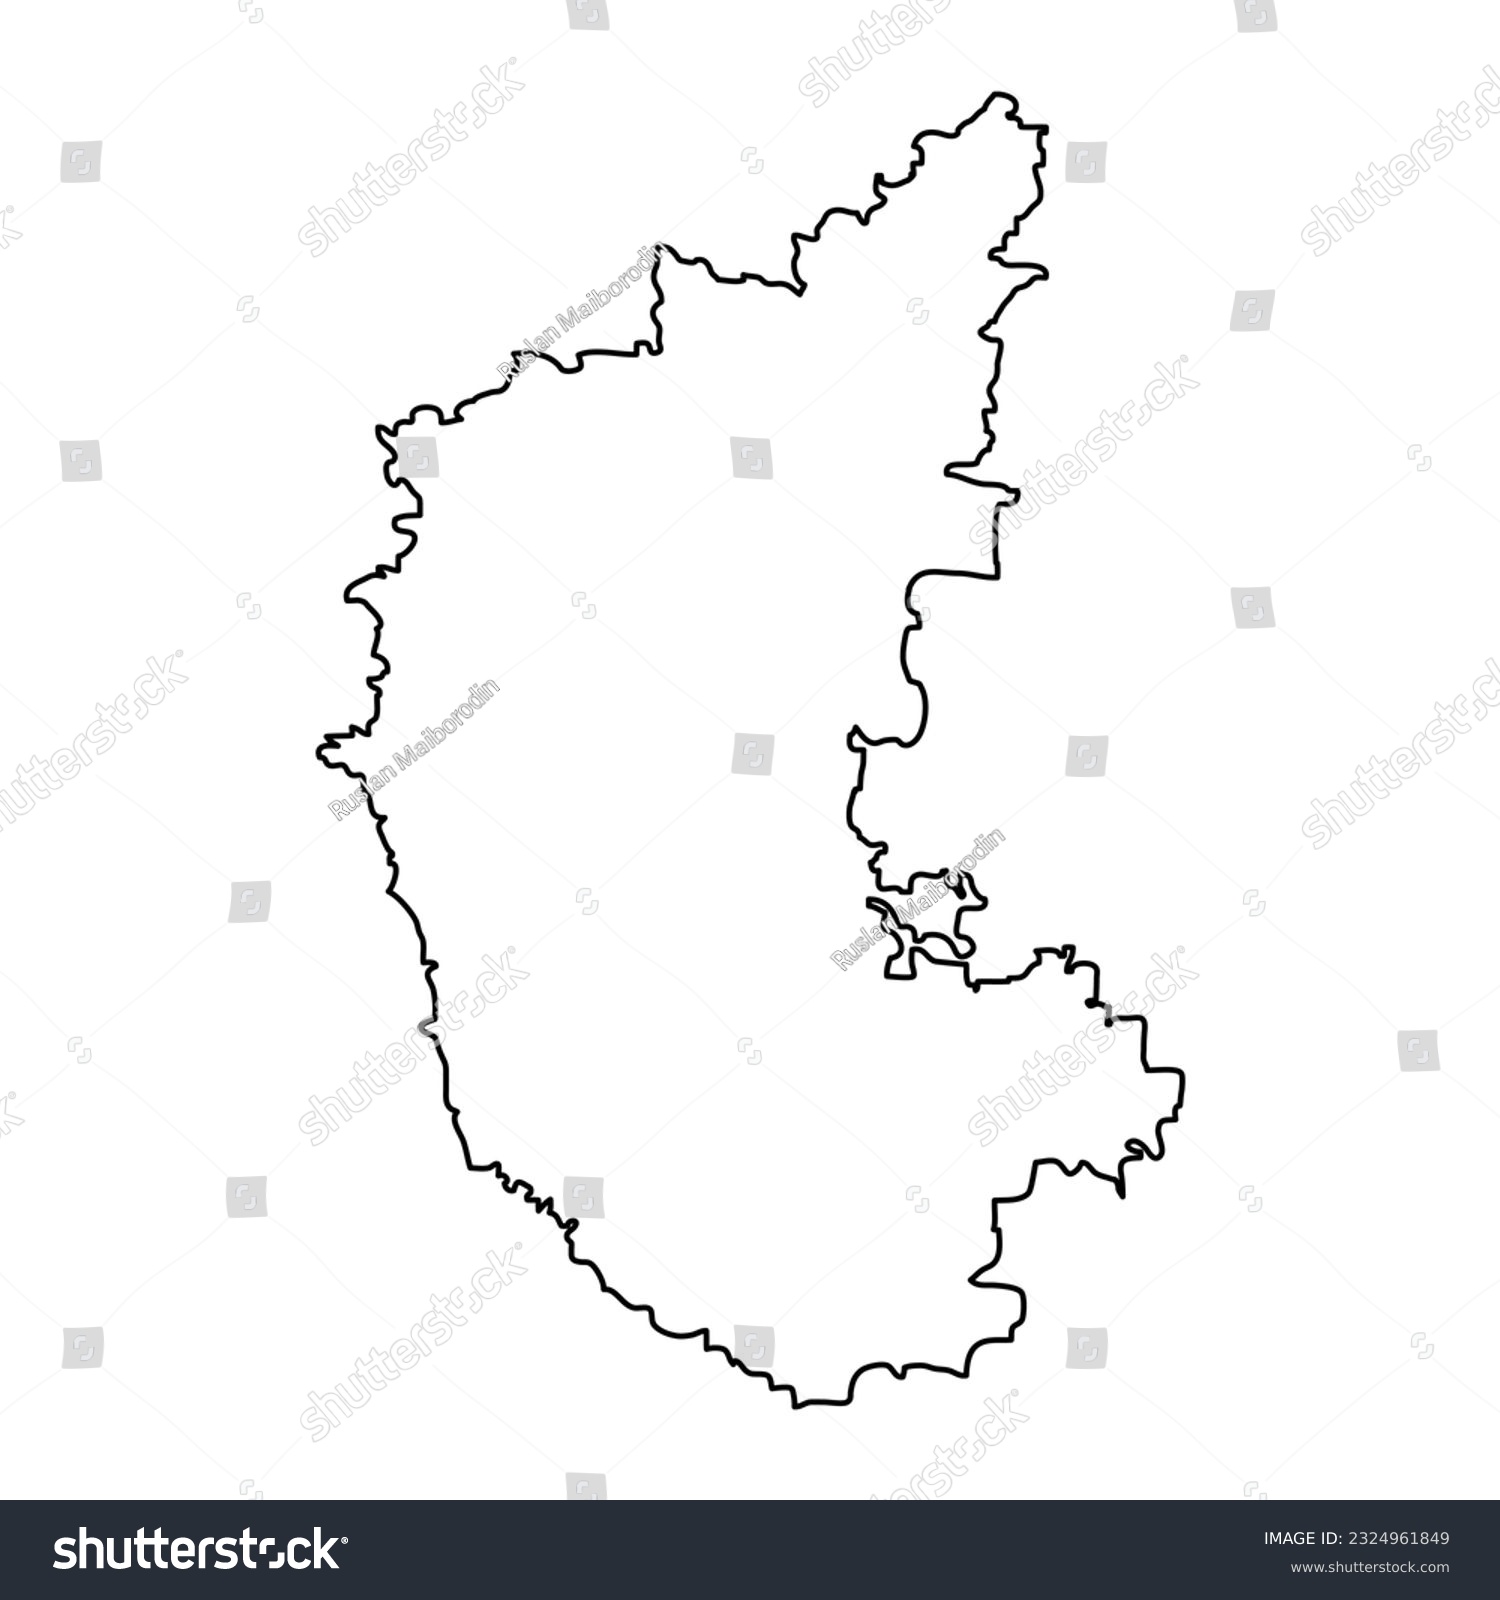 Karnataka state map, administrative division of - Royalty Free Stock ...